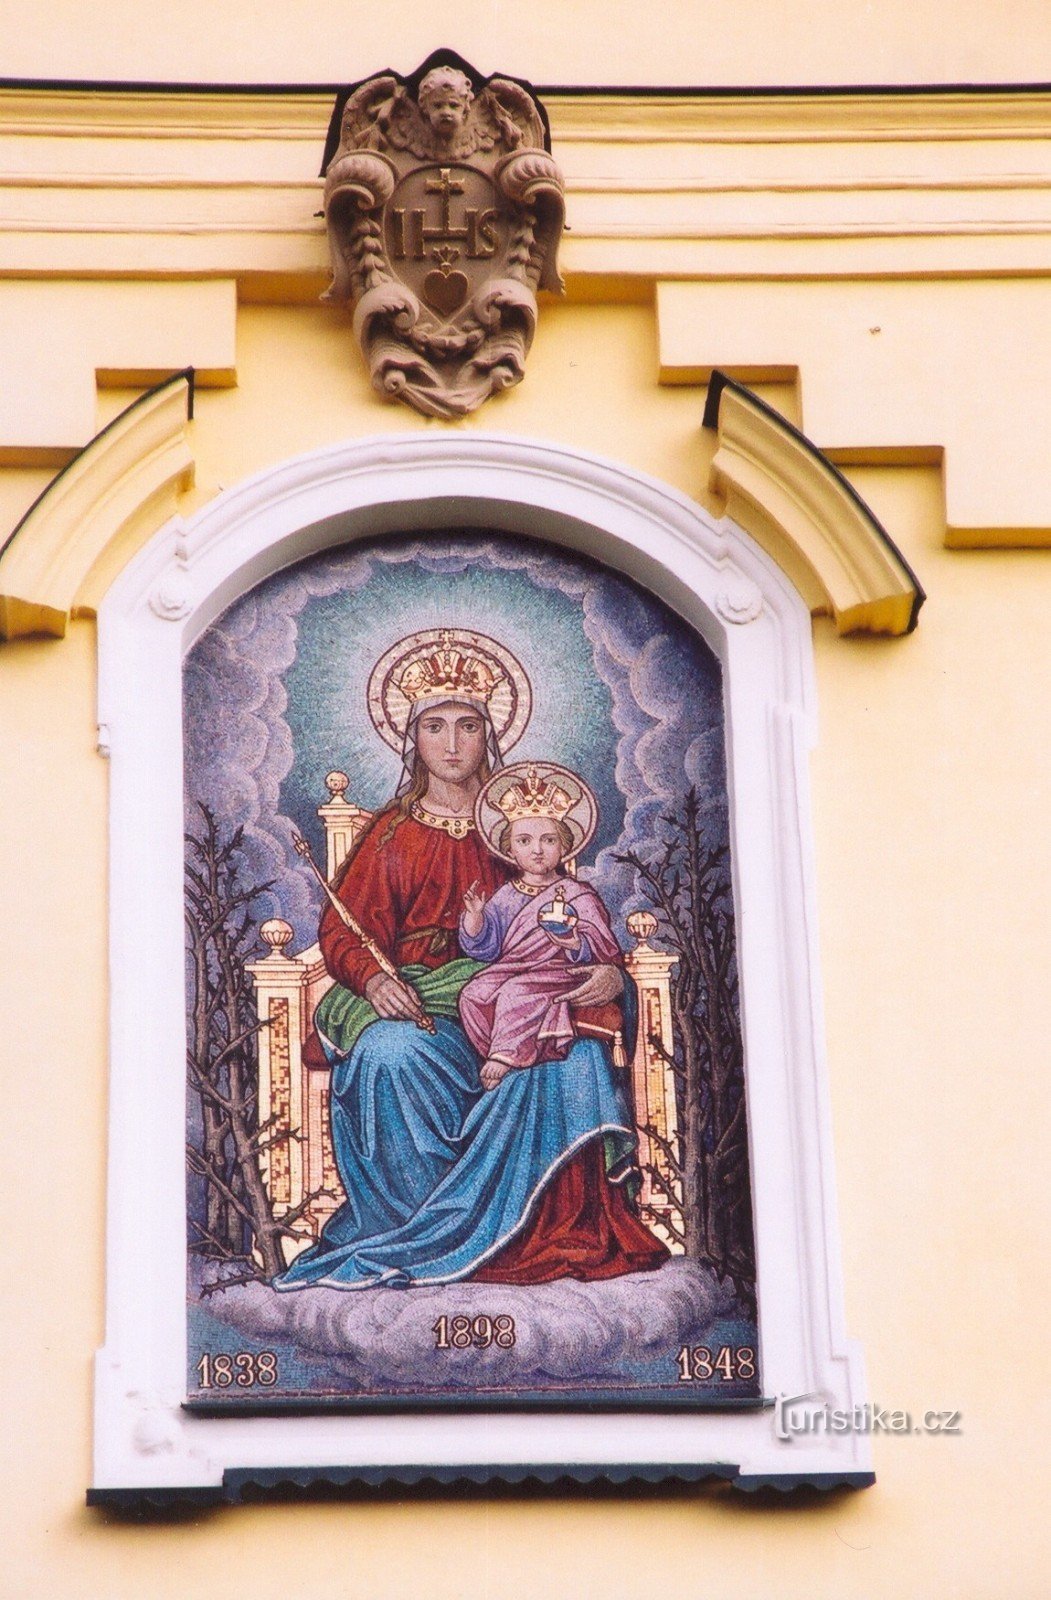 Brno-Tuřany - 聖母受胎告知教会